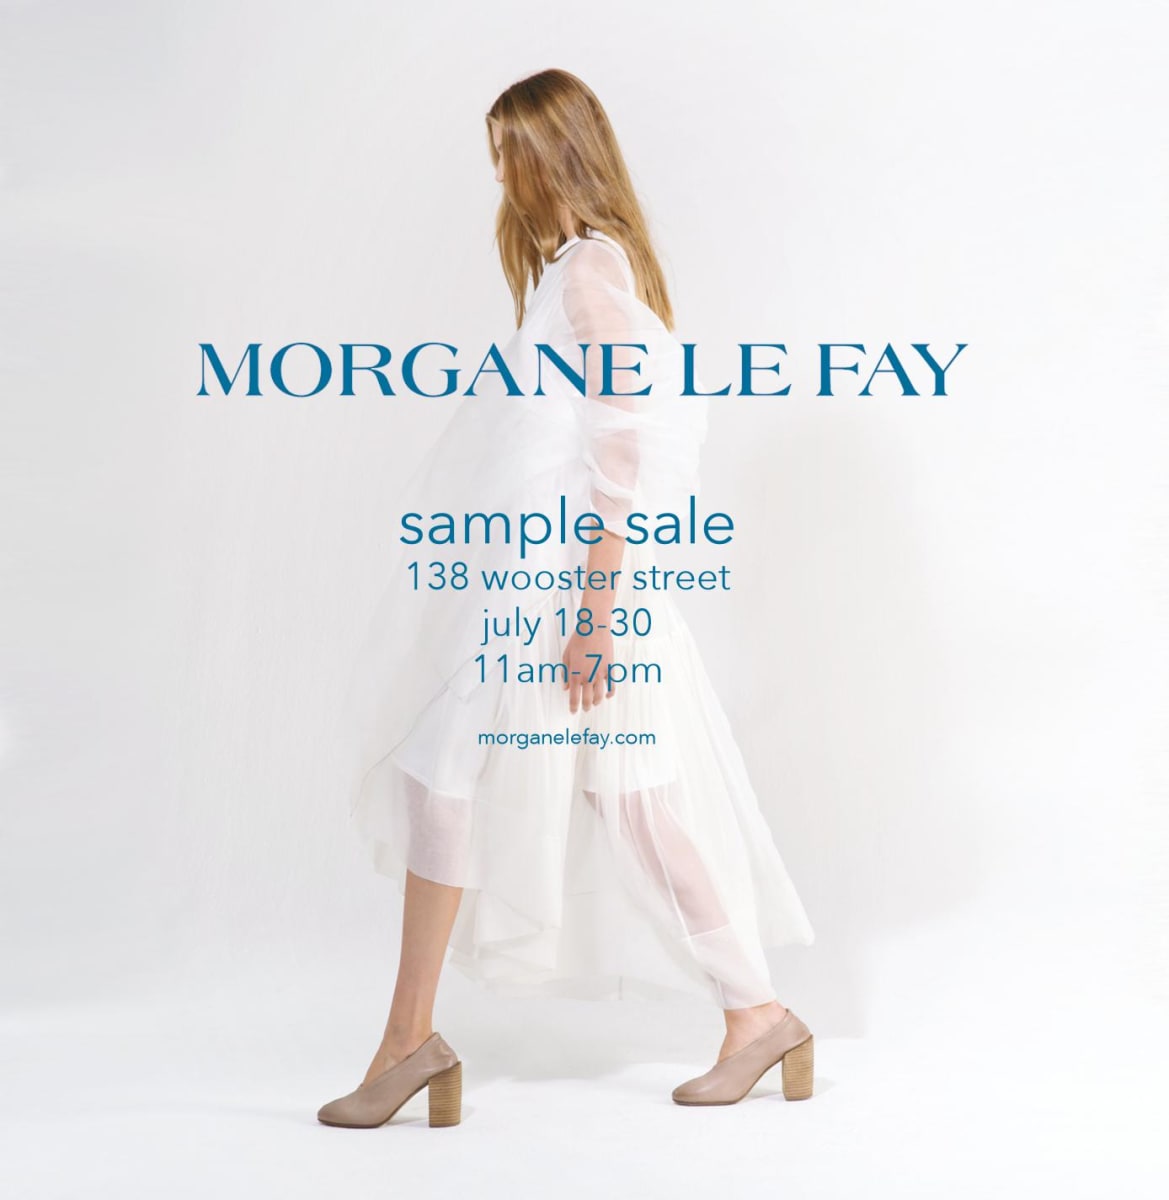 Morgane Le Fay Sample Sale, July 18th - 30th (New York, NY)